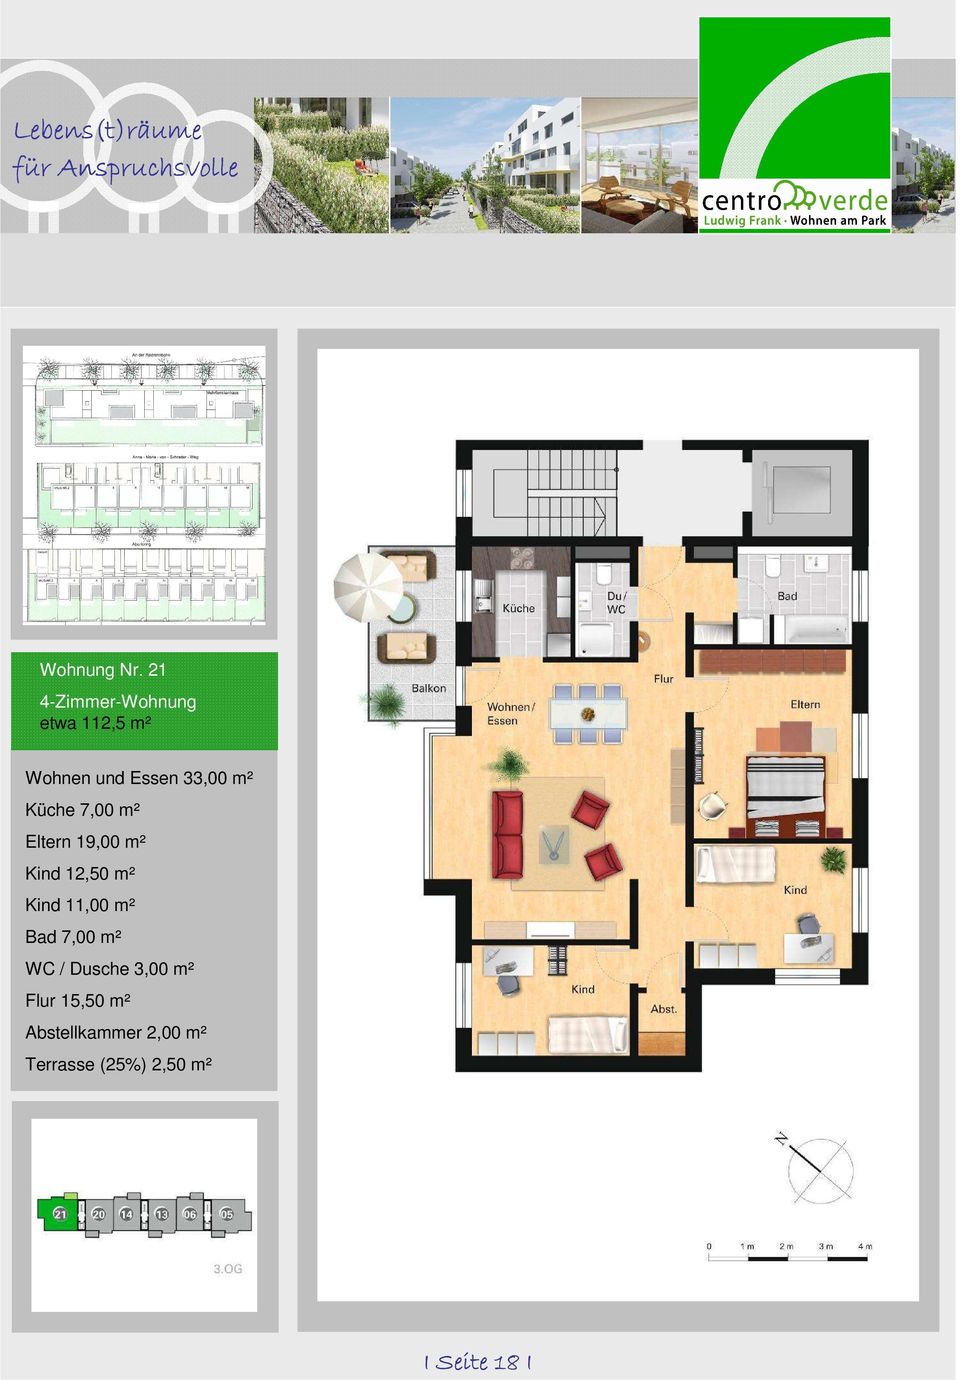 Küche 7,00 m² Eltern 19,00 m² Kind 12,50 m² Kind 11,00 m²